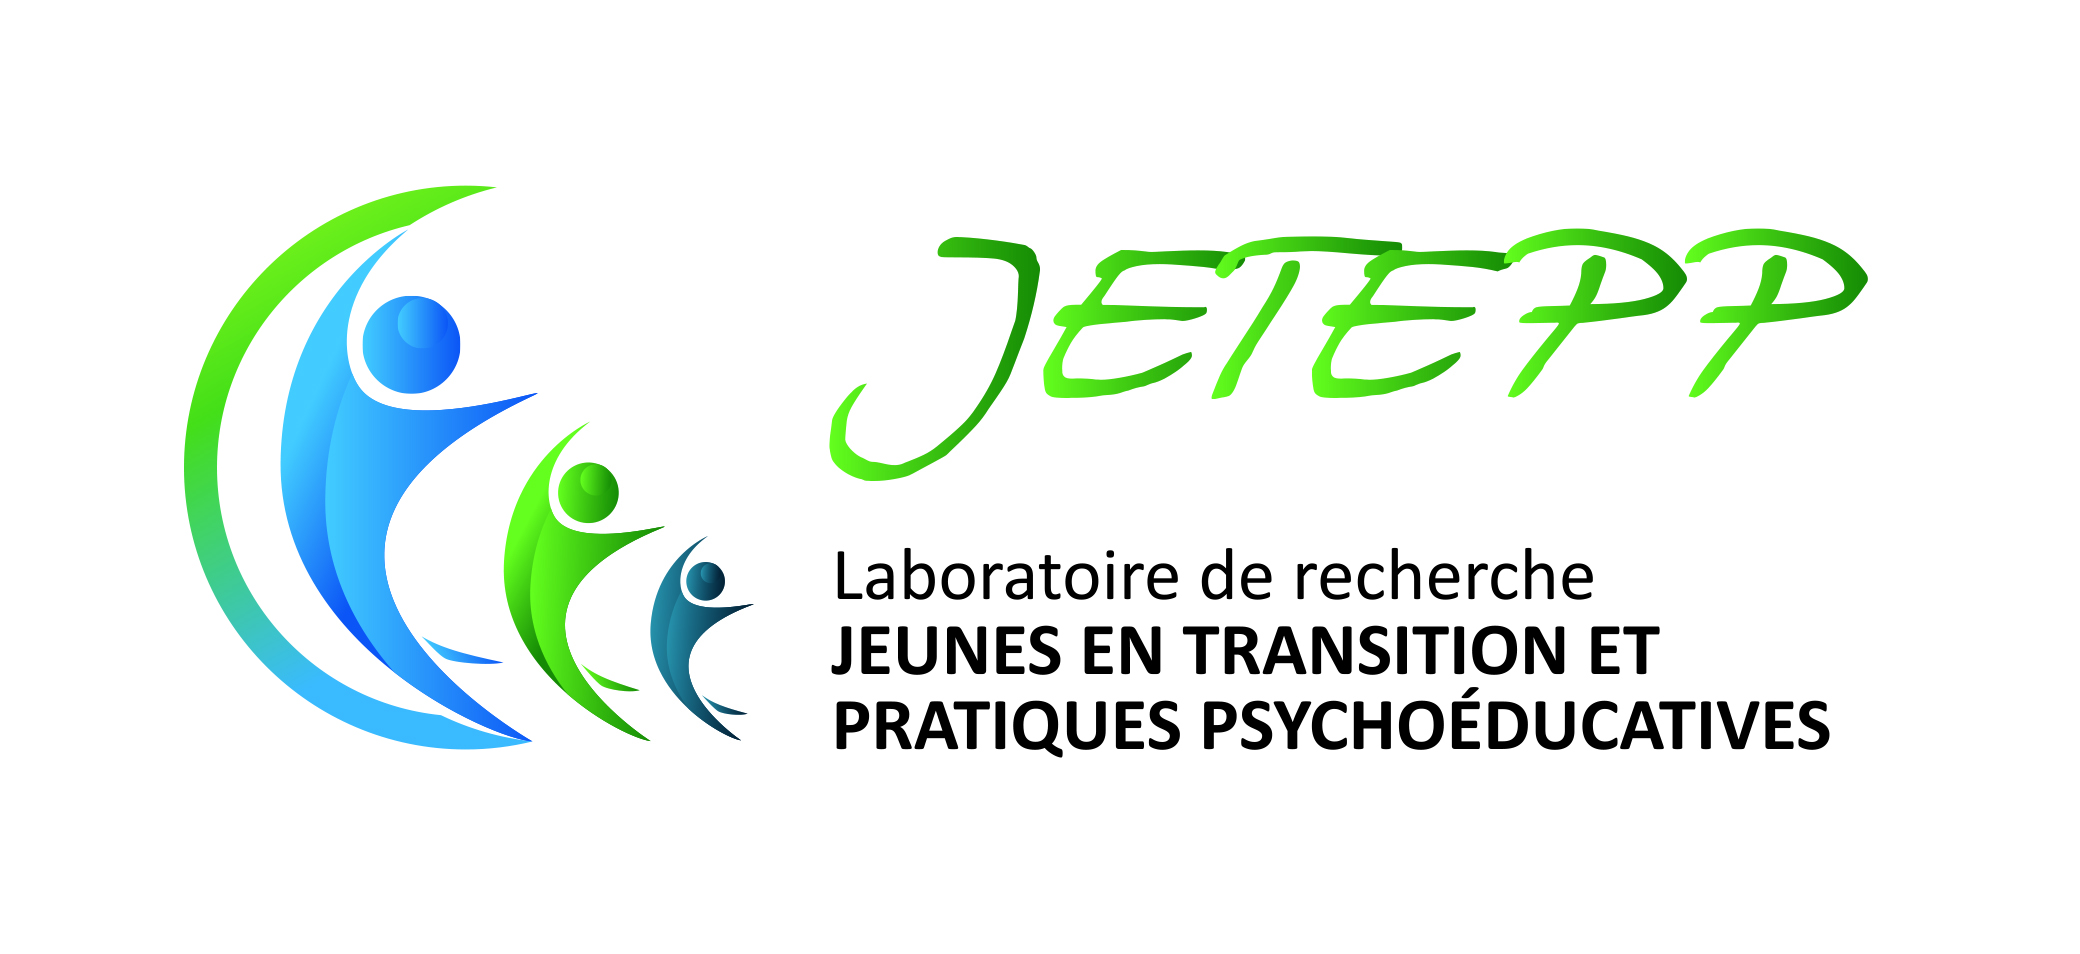 Logo_JETEPP_hauterésolution